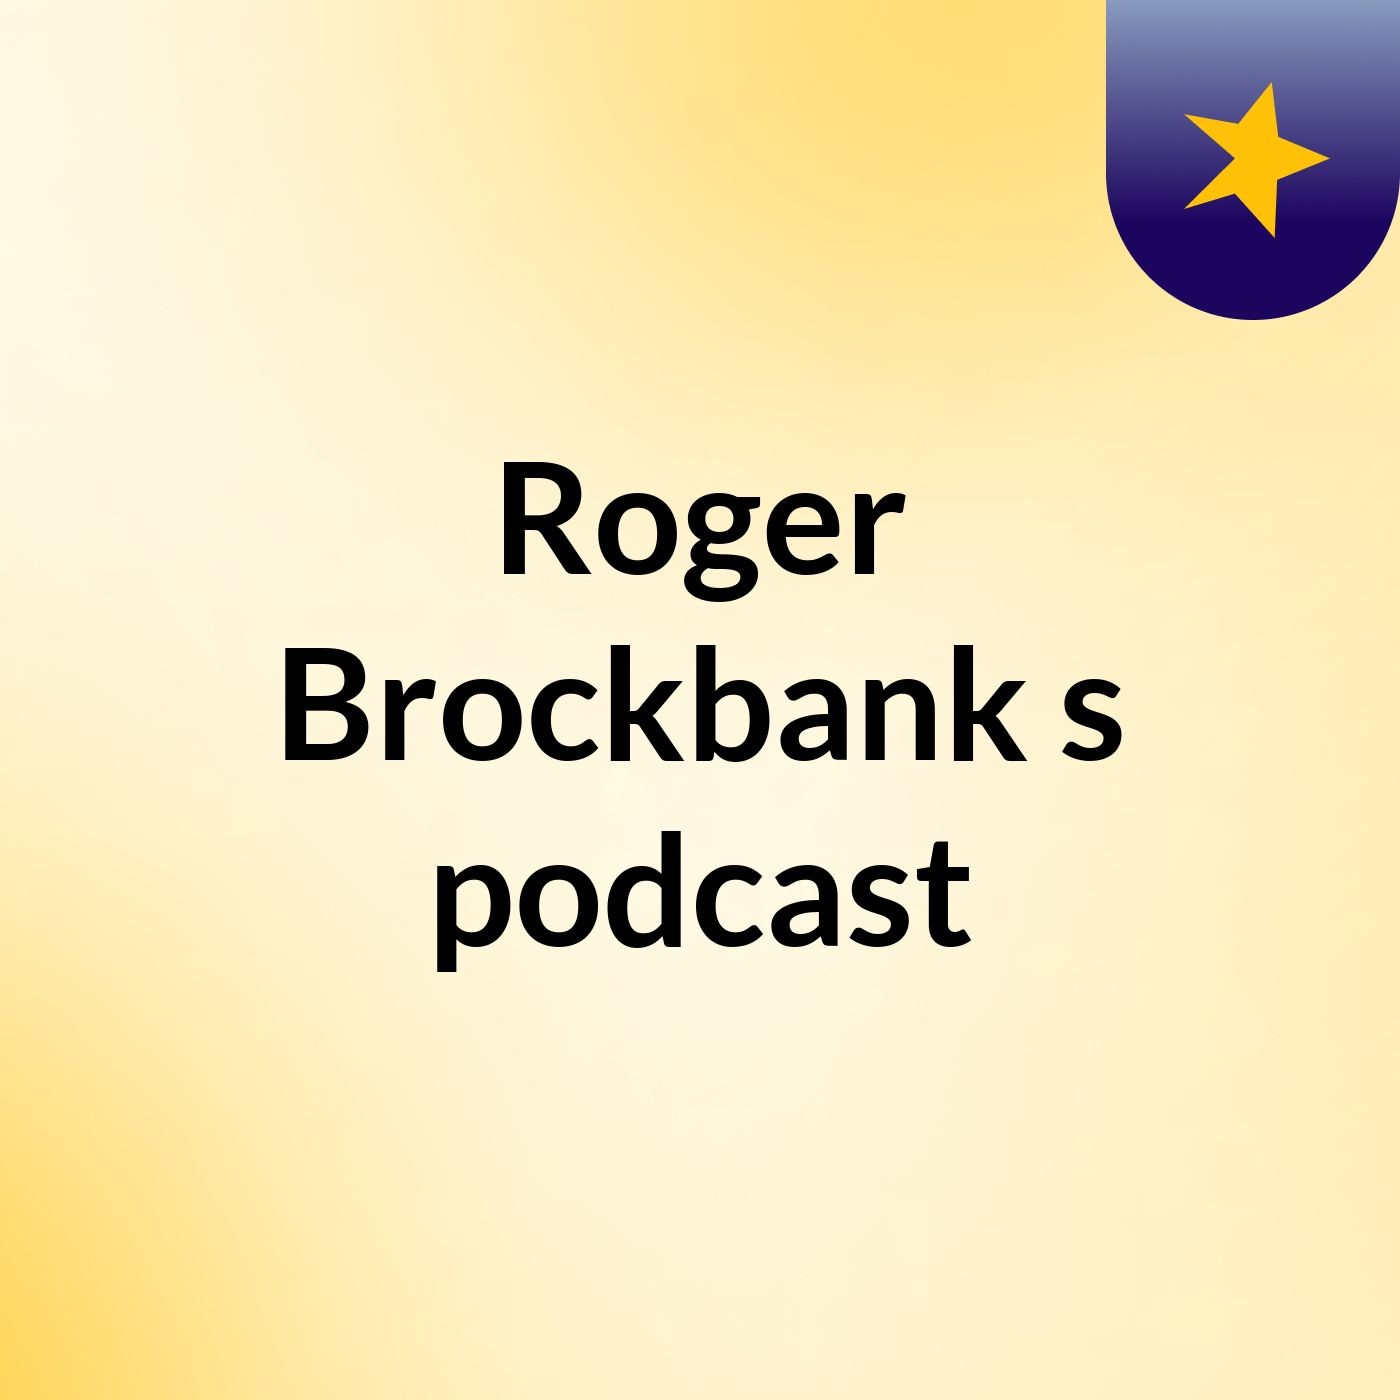 Roger Brockbank's podcast